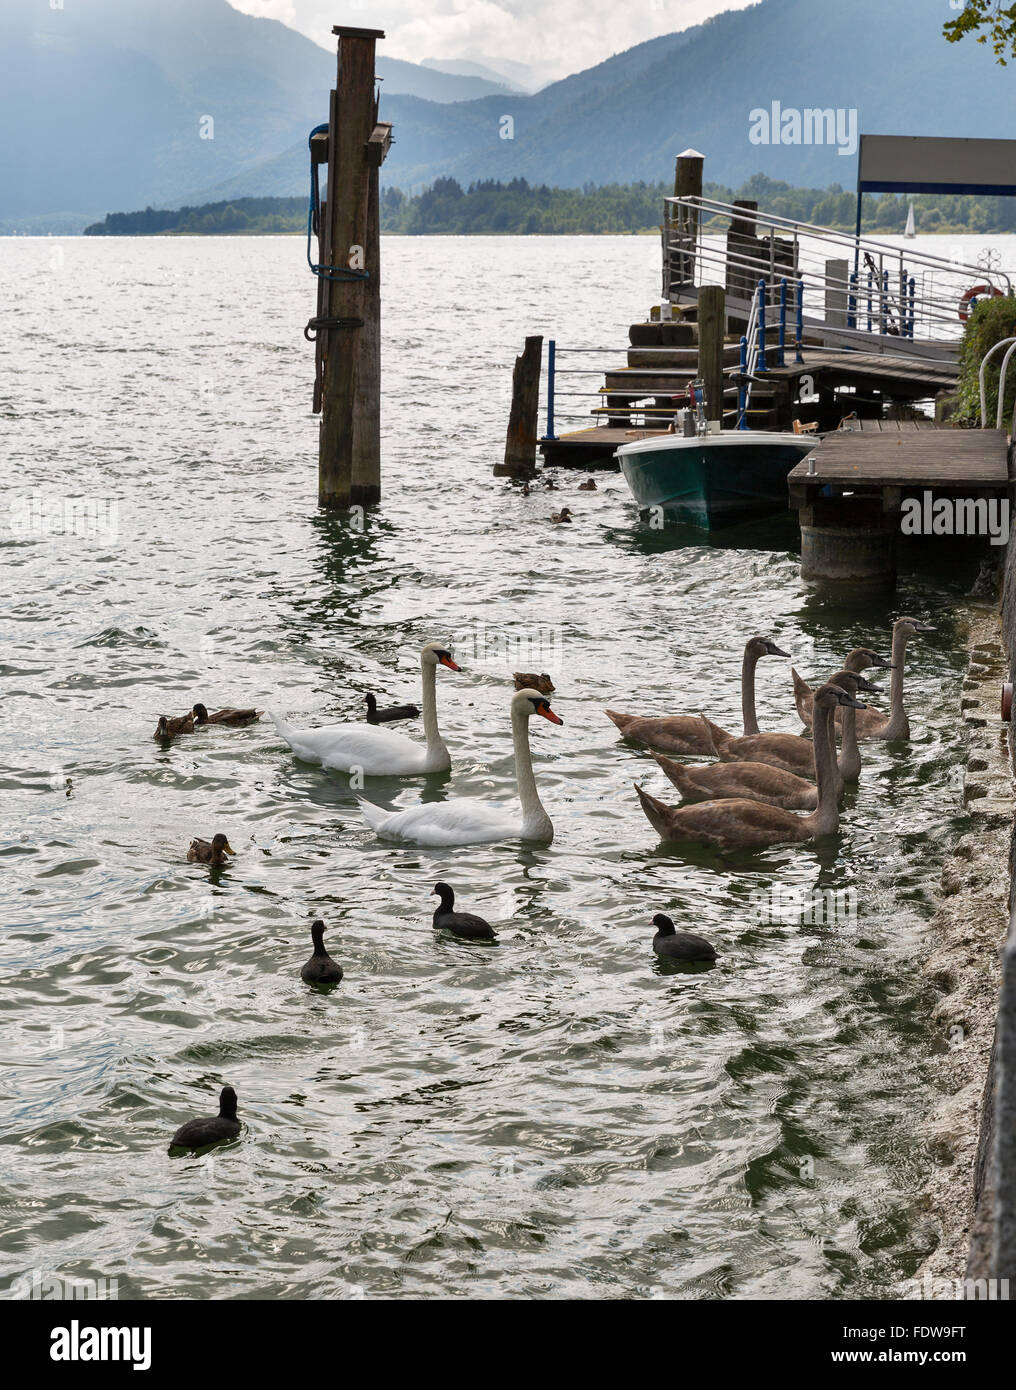 Wild swans, moorhens and ducks feeding near pier on Alpine lake Mondsee, Austria Stock Photo